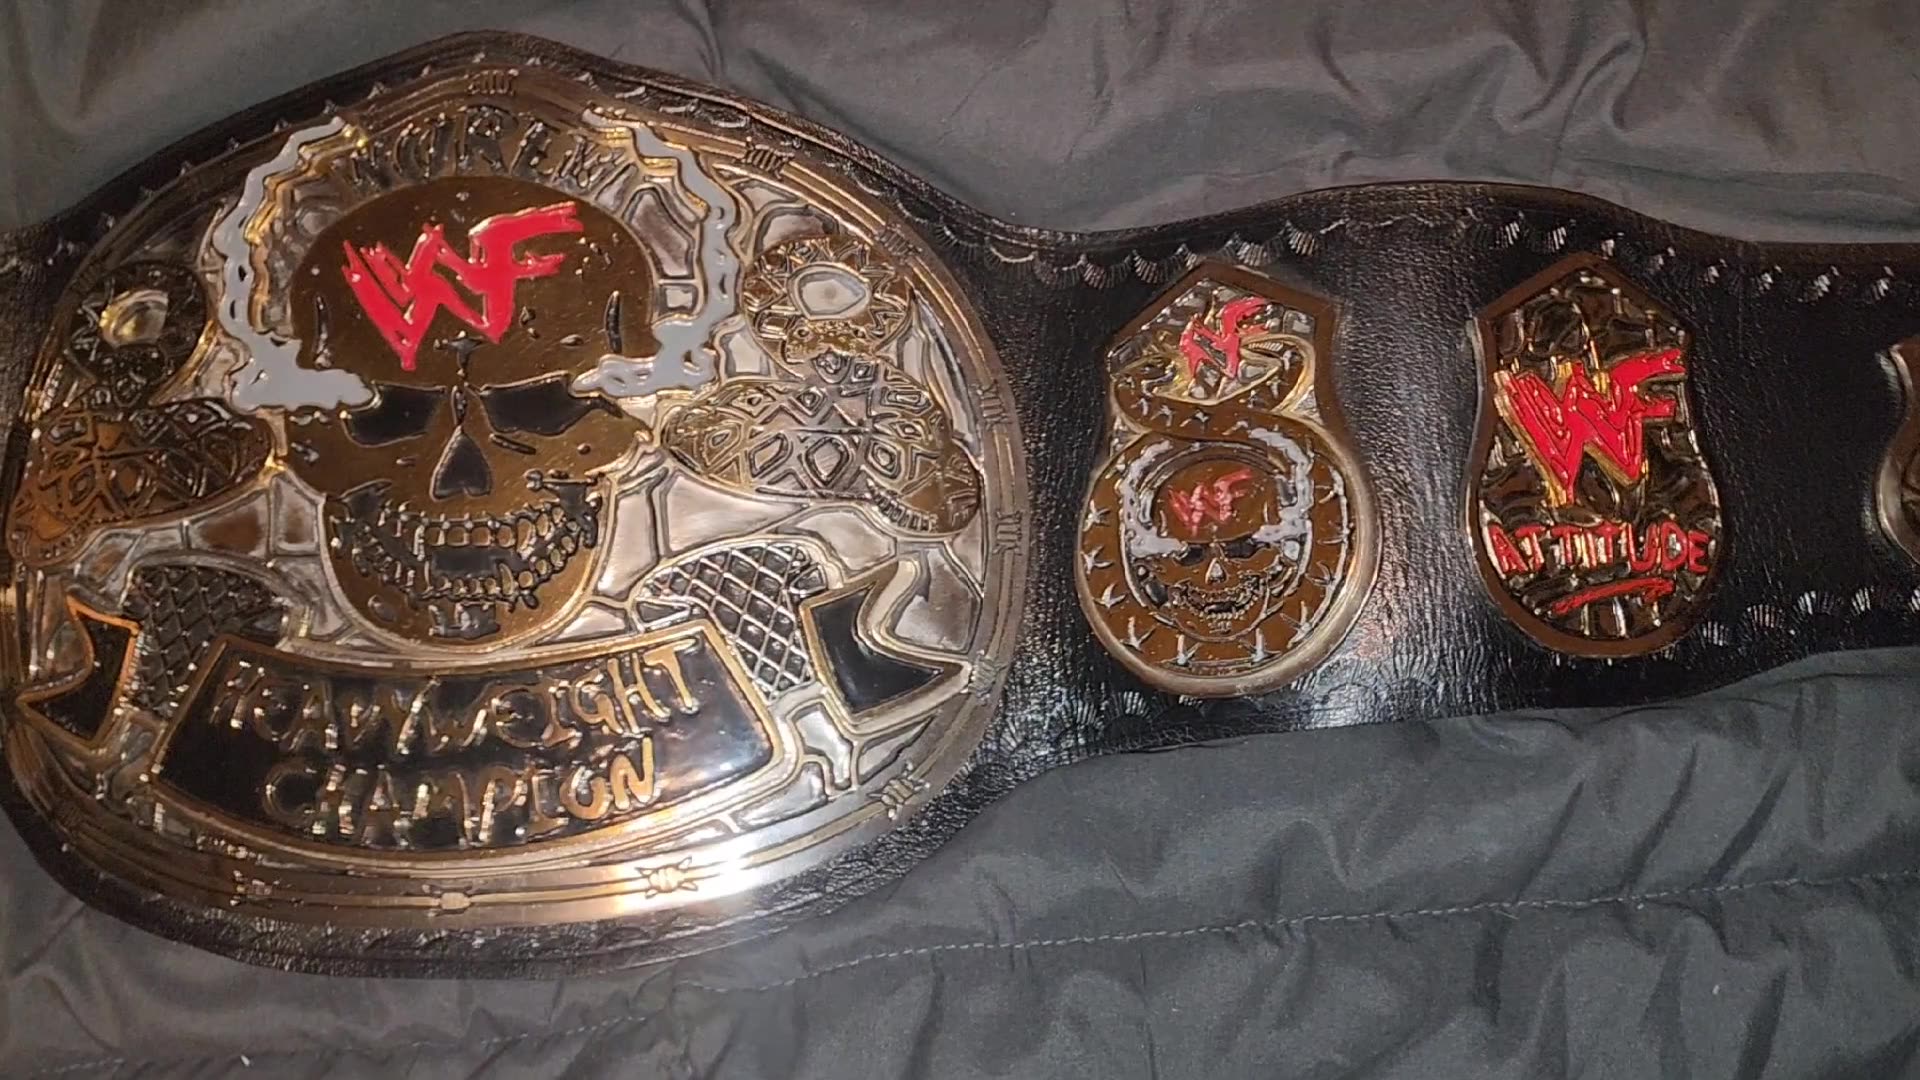 WWF Smoking skull championship replica (j-mar boot)